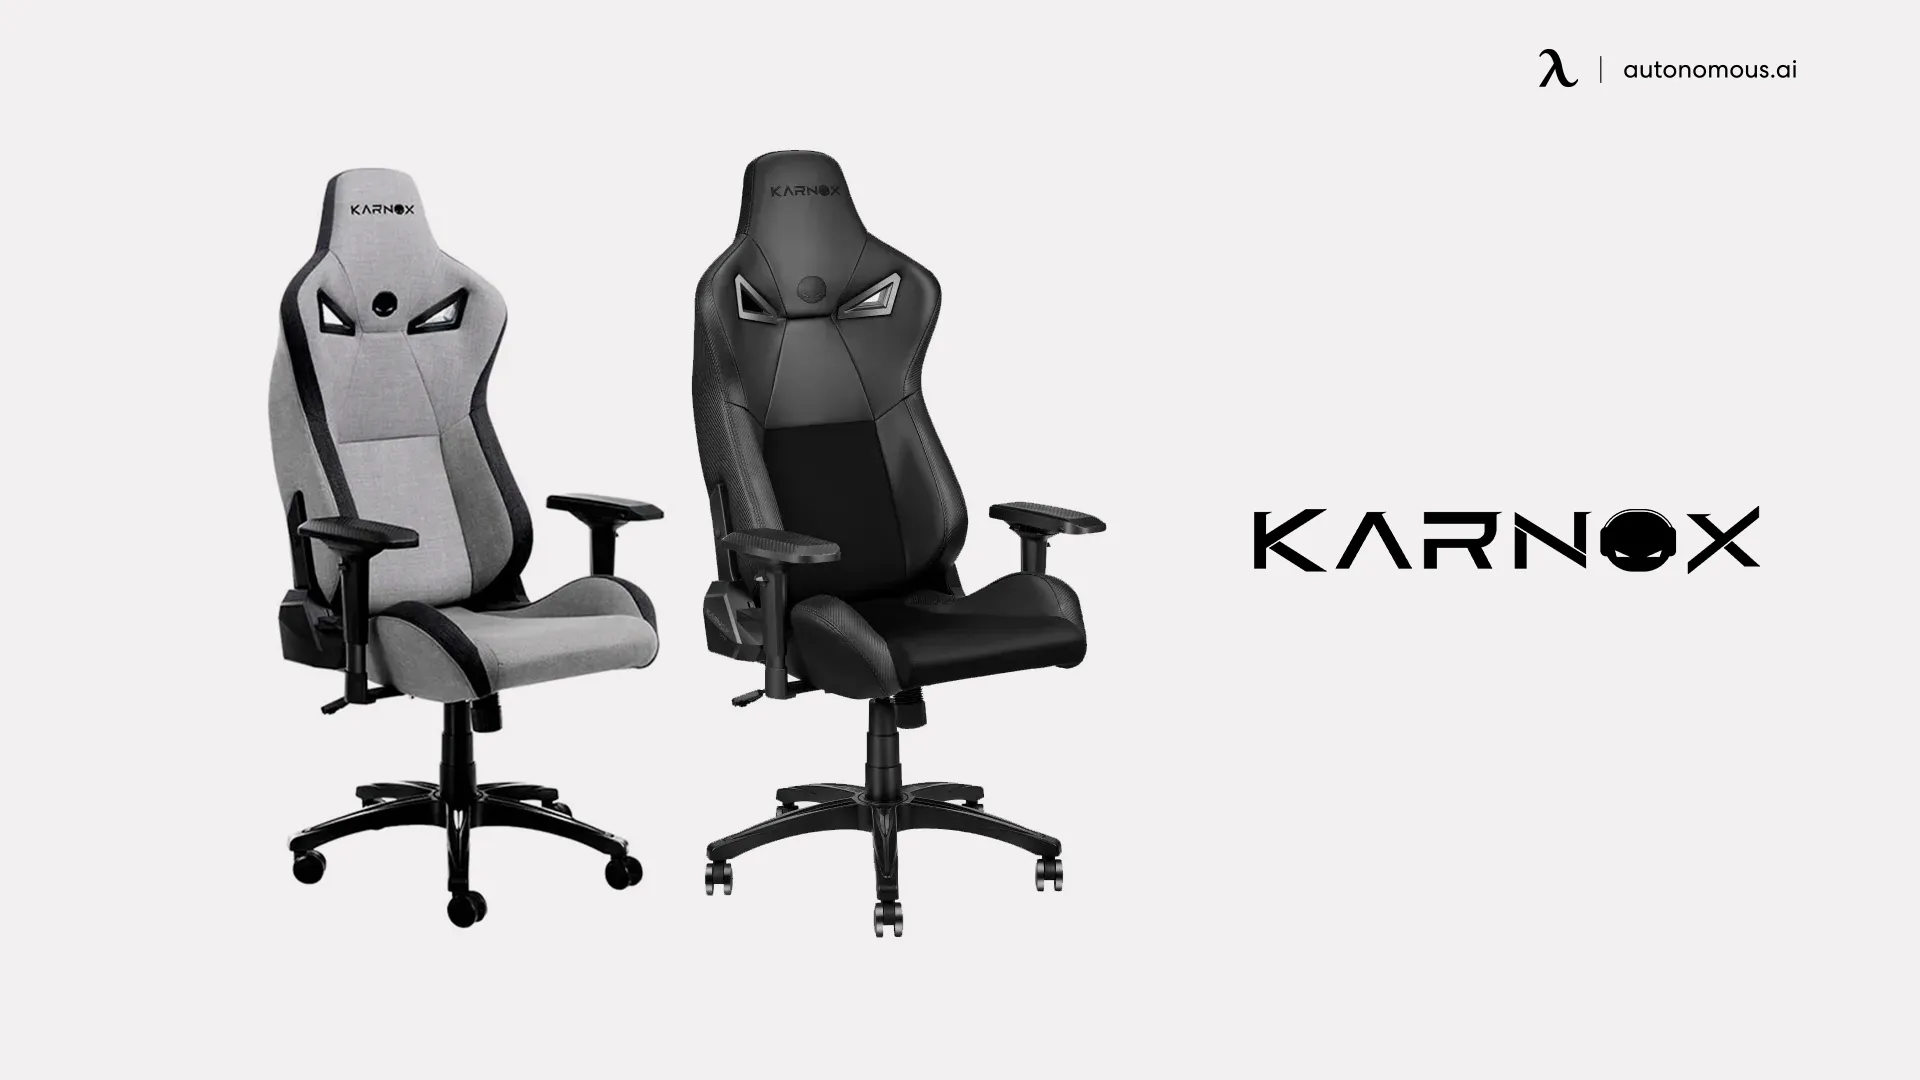 Karnox gaming chair brand